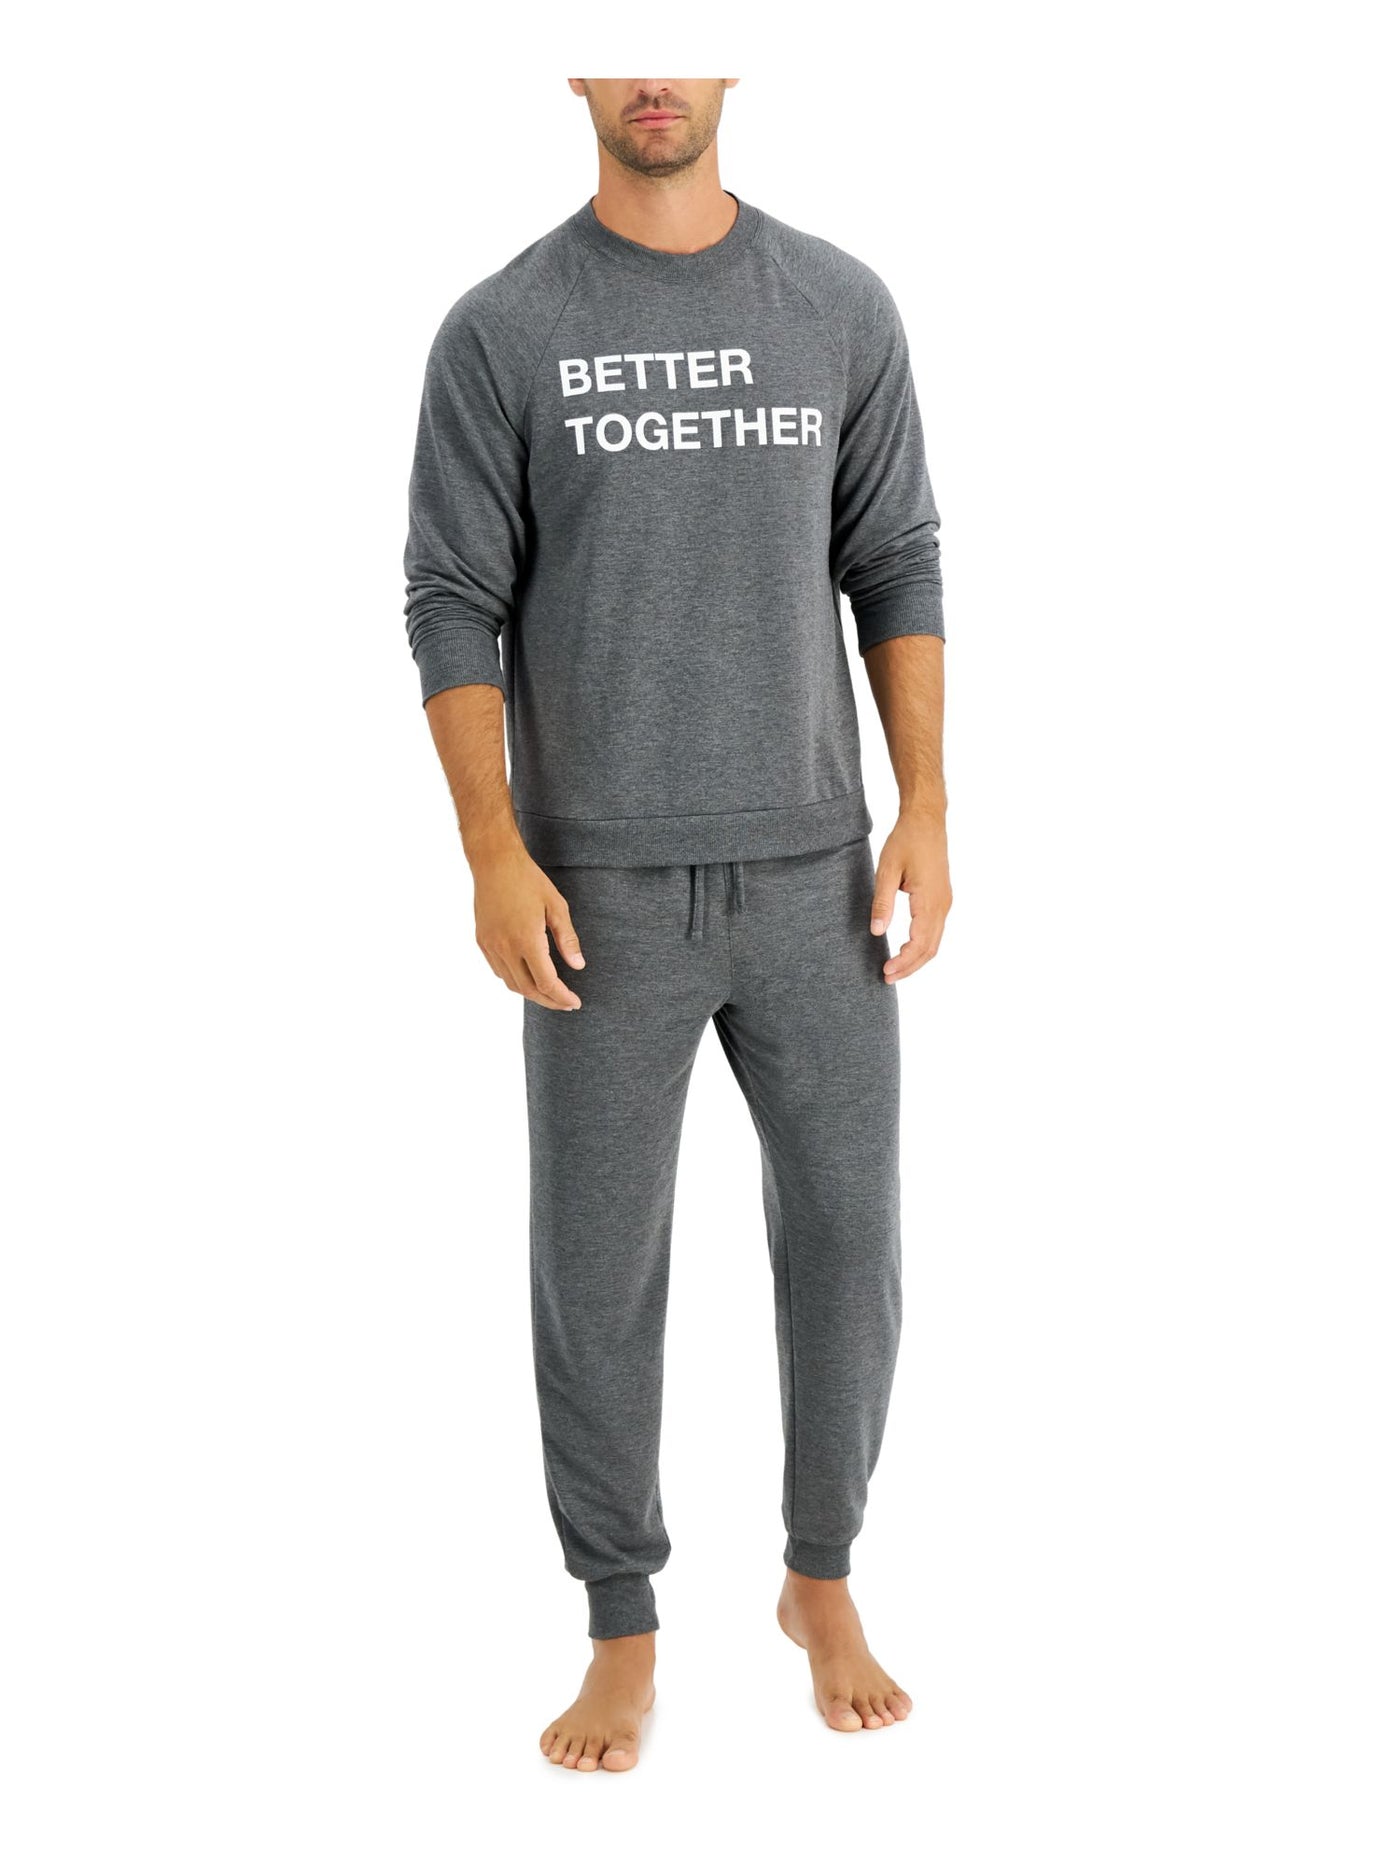 FAMILY PJs Mens Gray Graphic Drawstring Long Sleeve T-Shirt Top Cuffed Pants Pajamas M